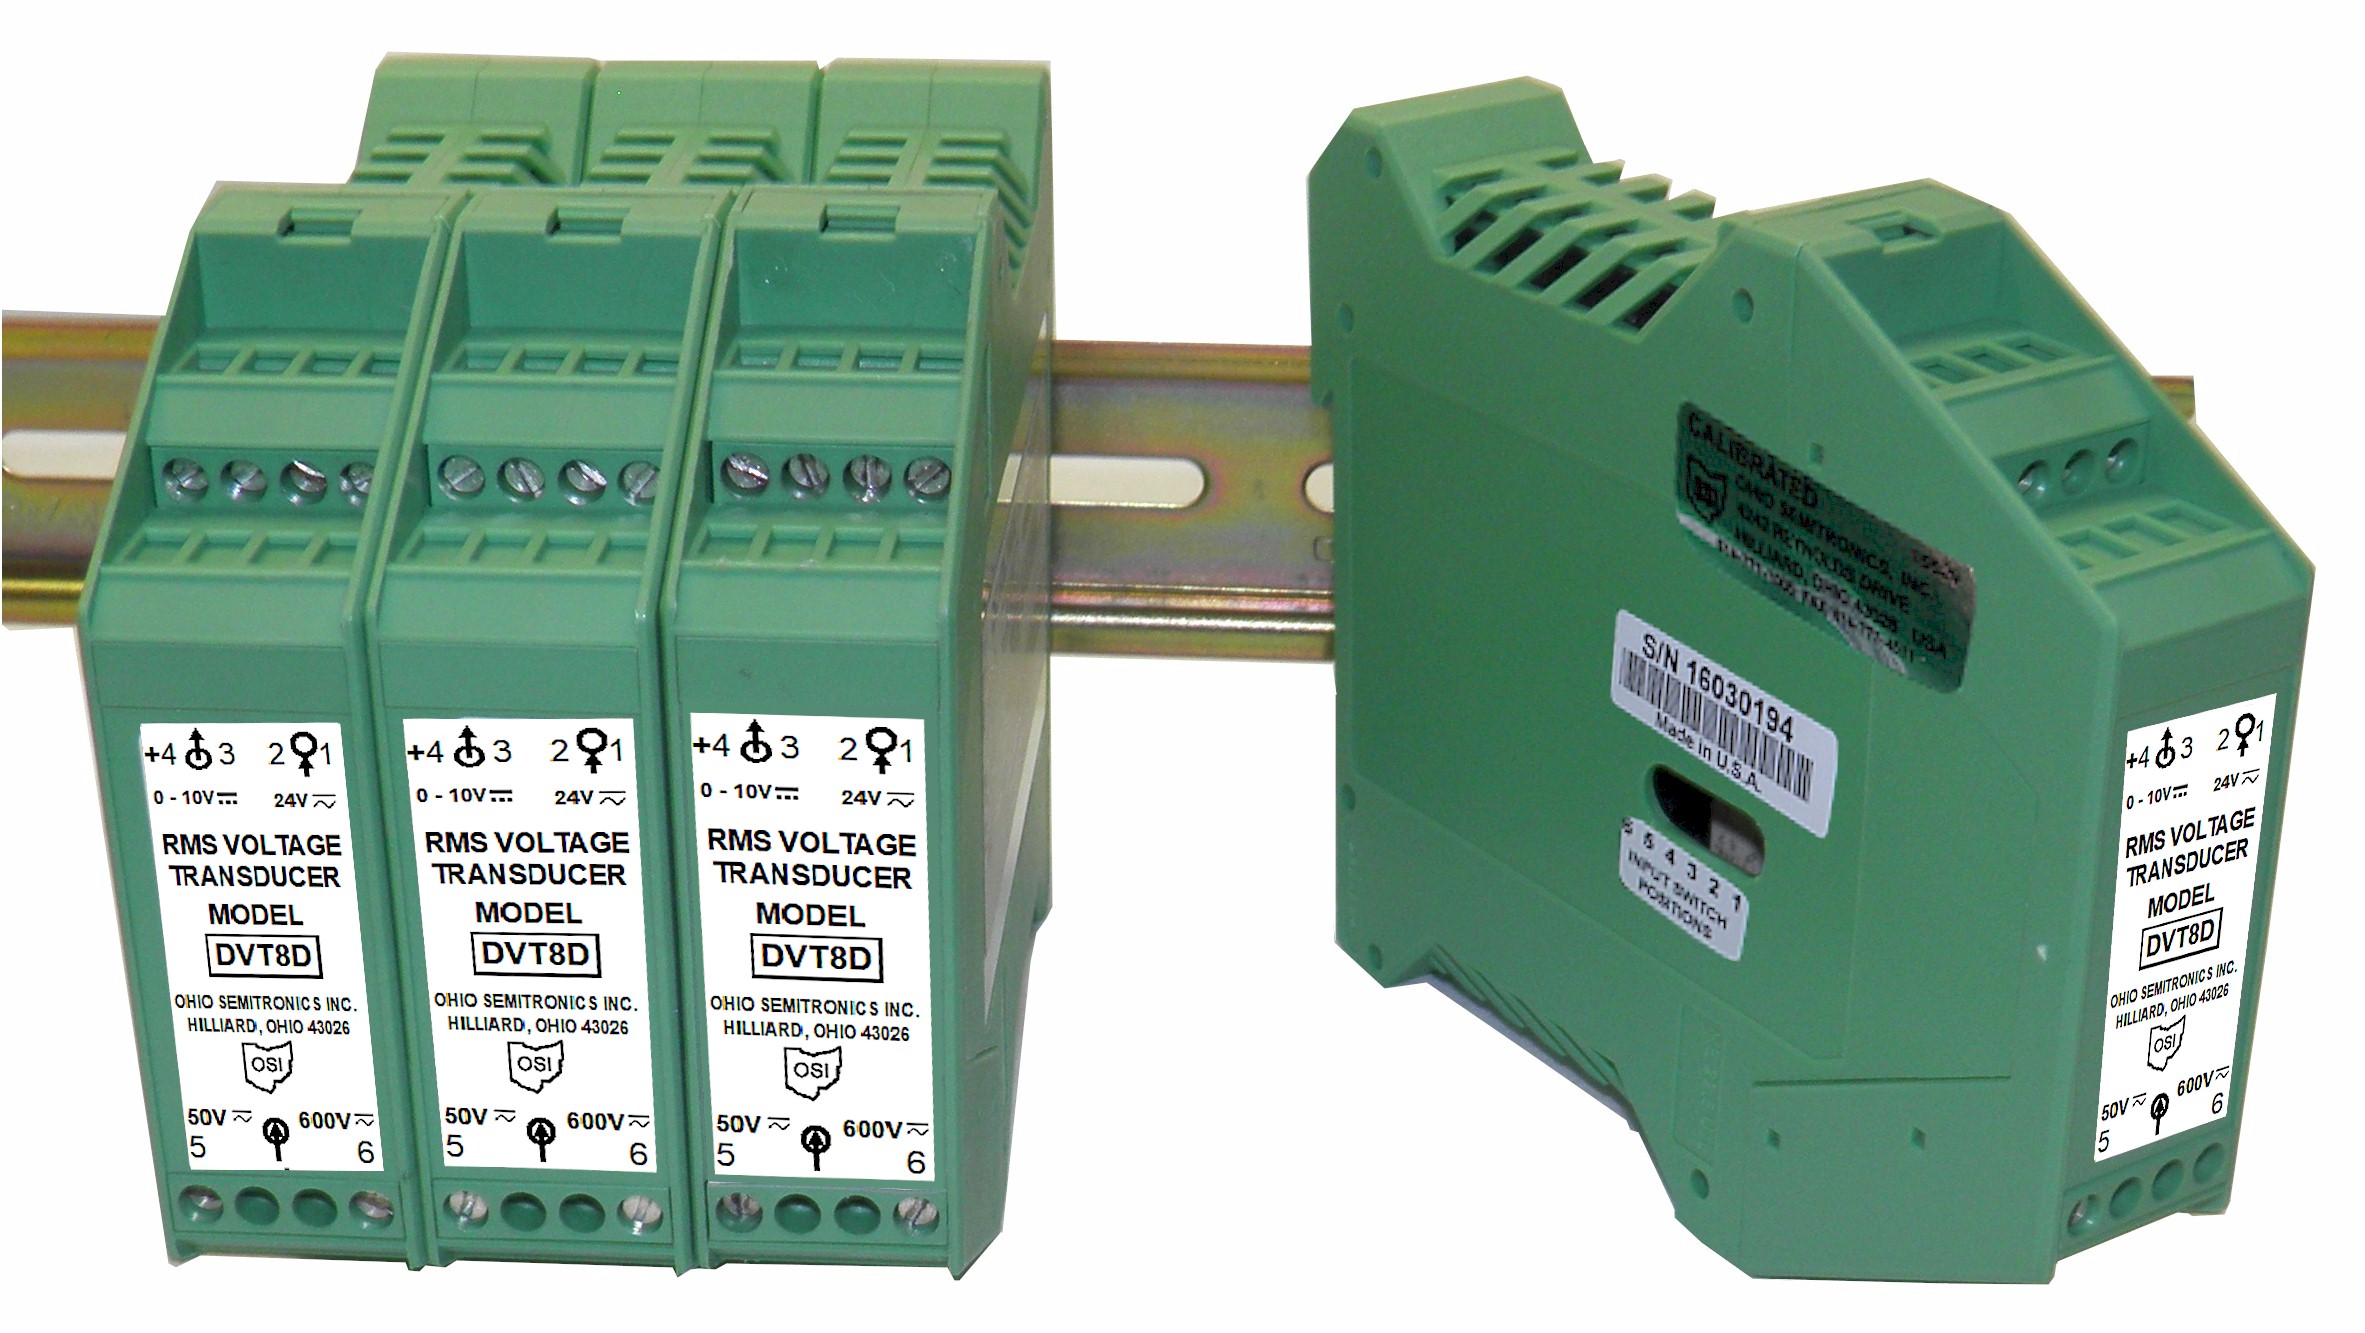 =2K  Output Load 20 Hz 0-5 VDC Output Range 0-50 VAC Input Range 5 KHz CR Magnetics CR4870-50 3-Element 4-Wire Average RMS AC Voltage Transducer 24 VDC +/-10% 